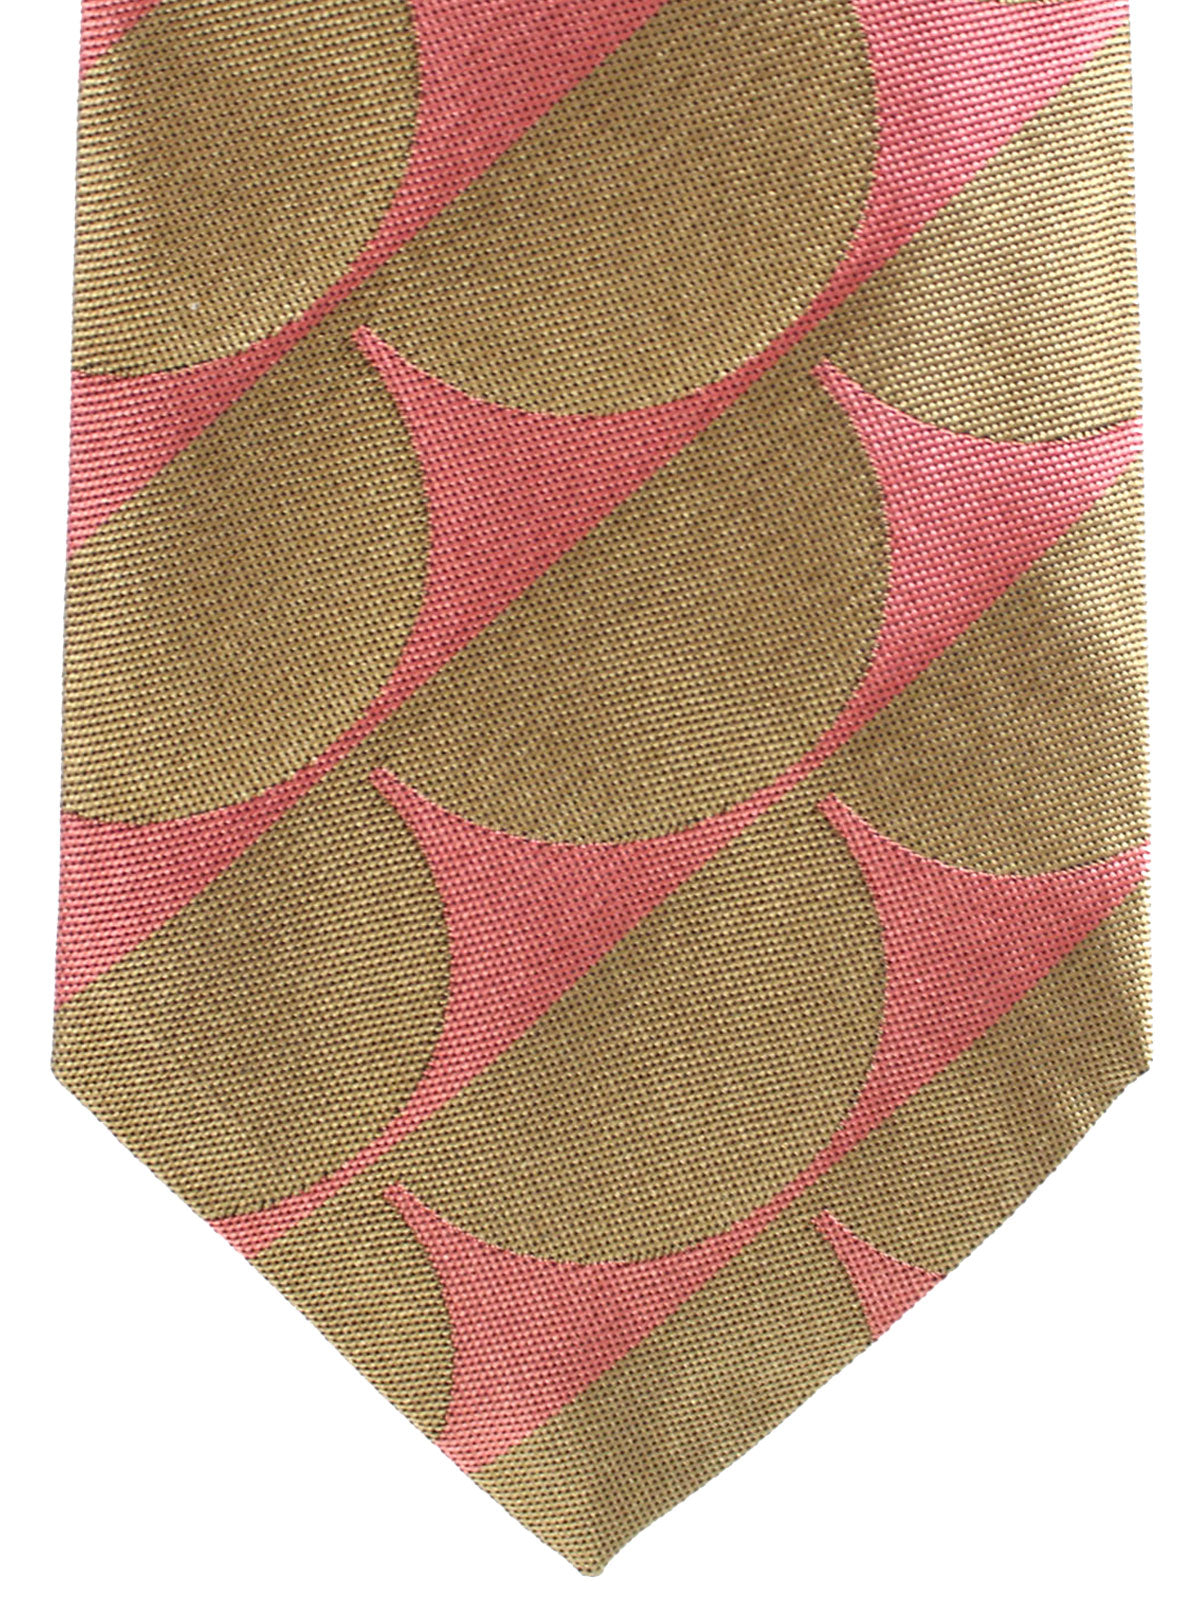 Gene Meyer Silk Tie Taupe Pink Geometric